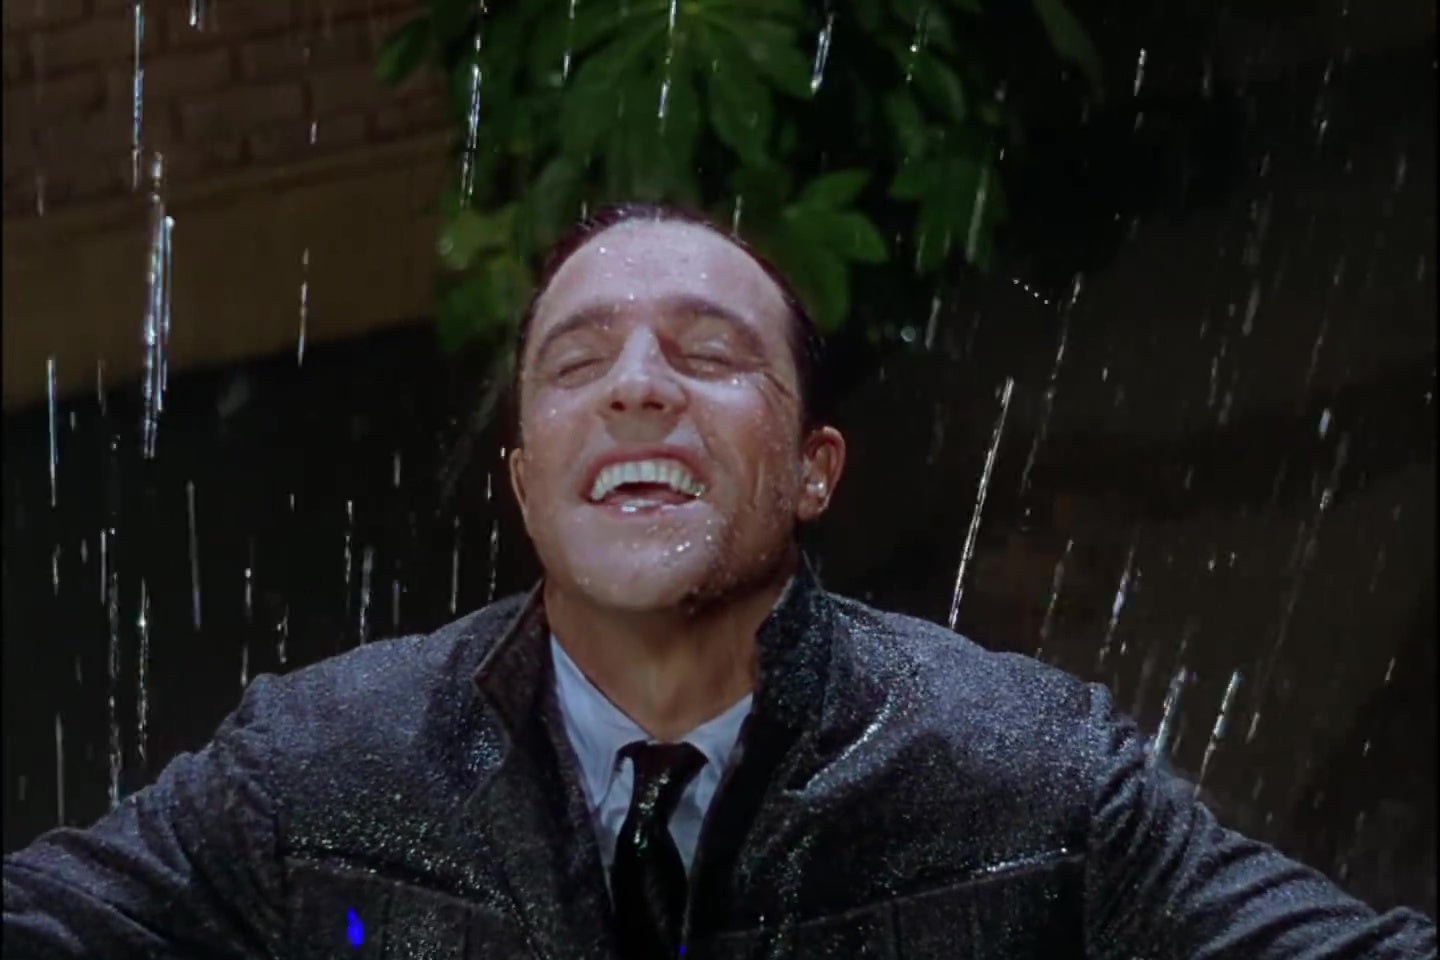 Gene Kelly smiling in a downpour in Singin' in the Rain.